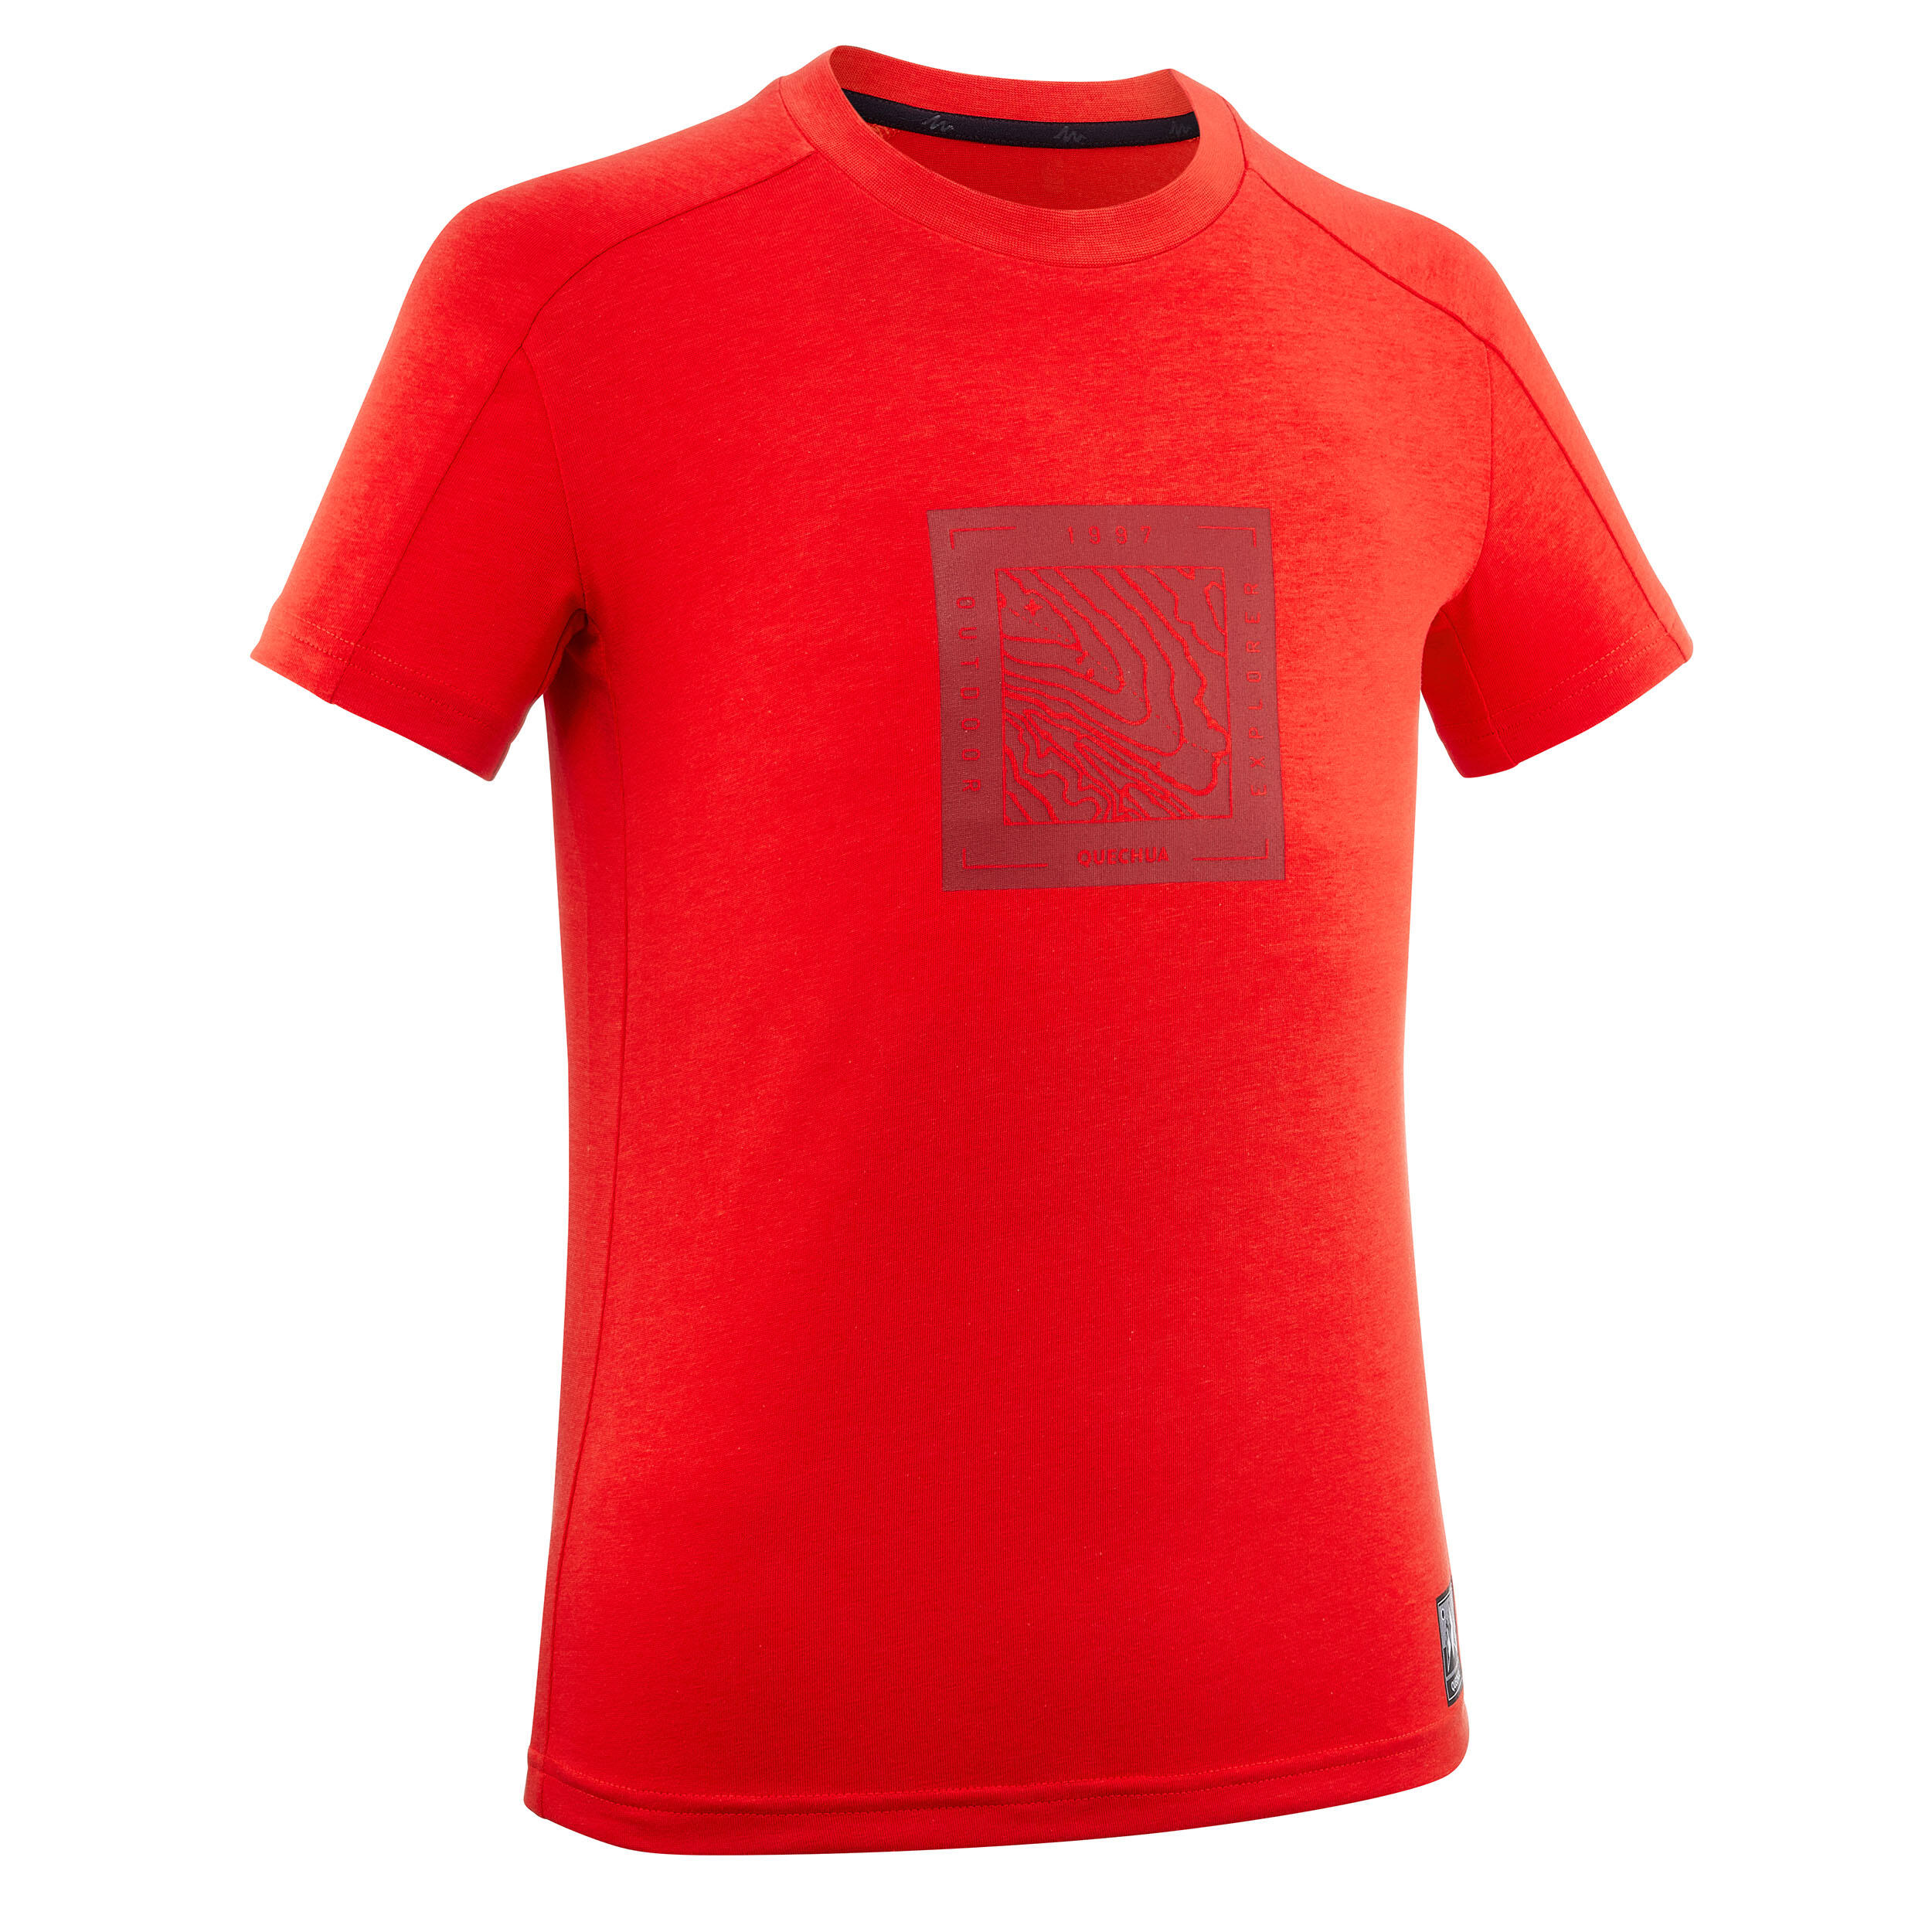 QUECHUA Kids' Hiking T-Shirt - MH100 Aged 7-15 - Red